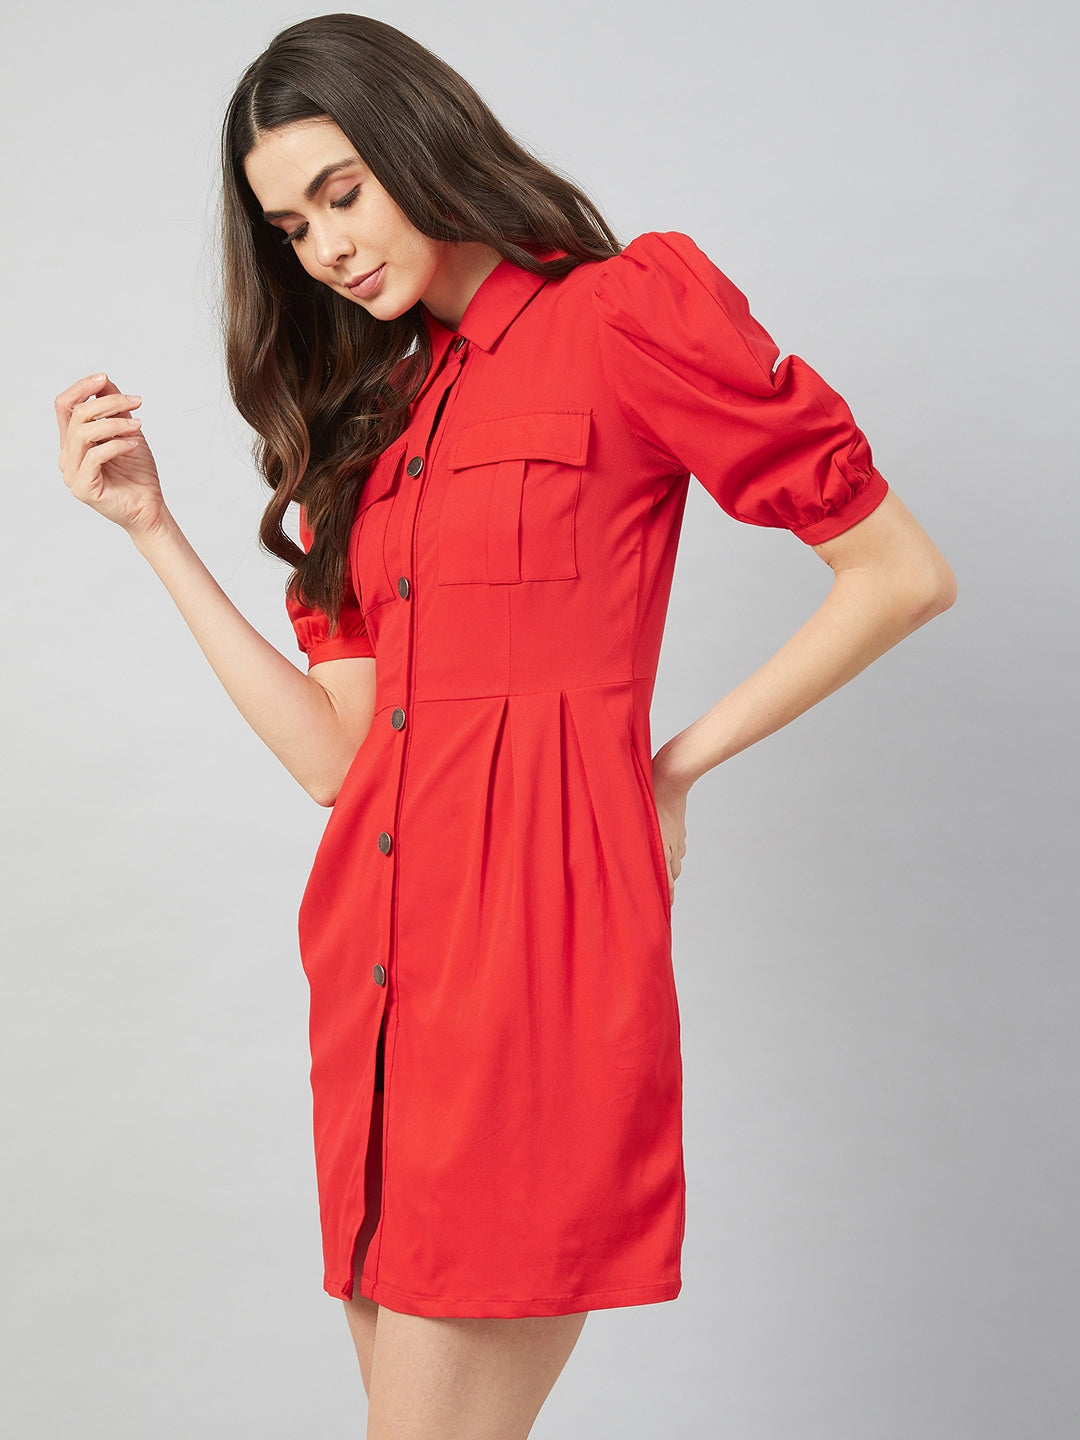 Athena Red Shirt Dress - Athena Lifestyle